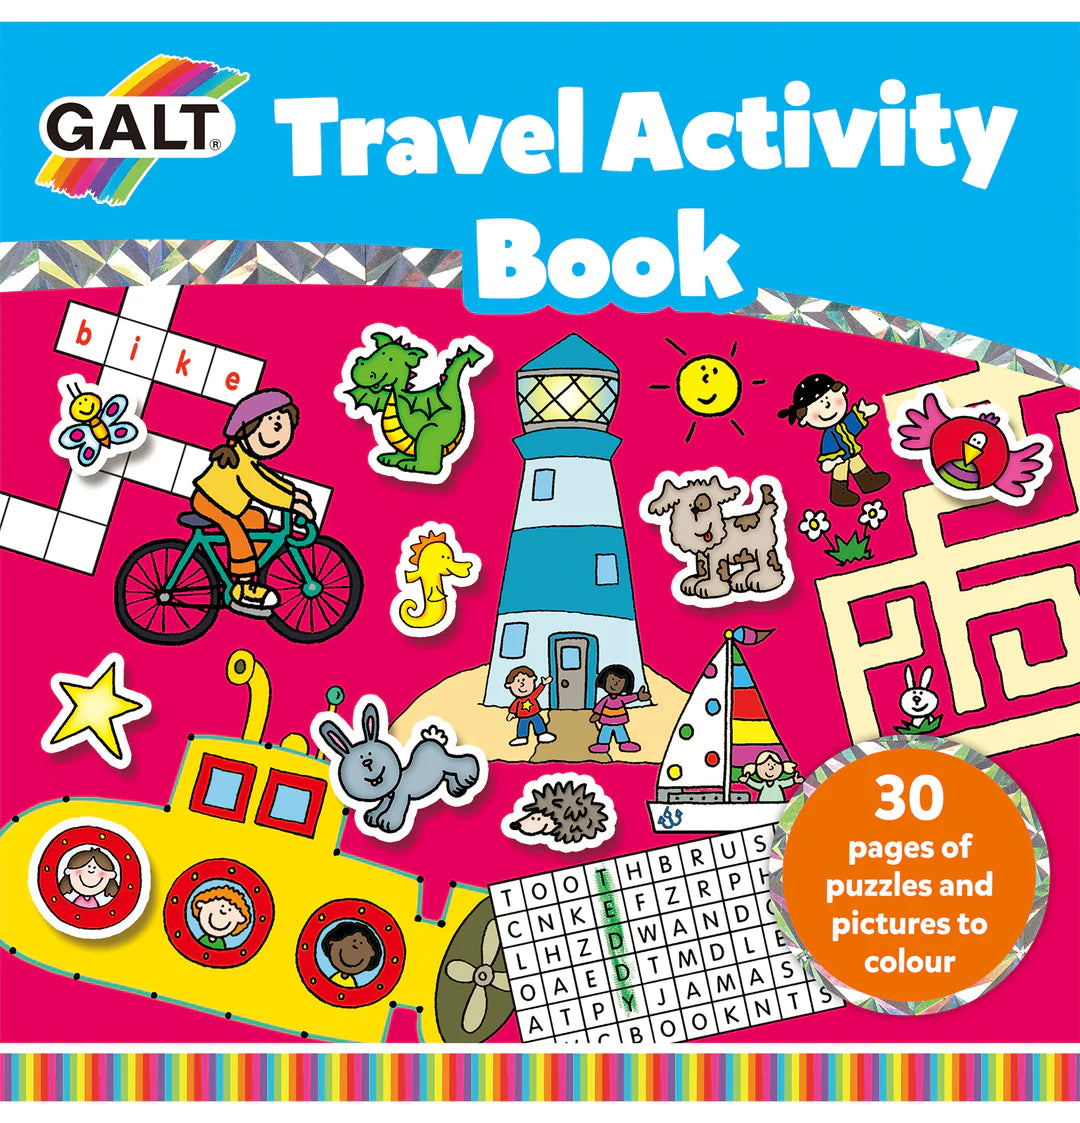 Galt Travel Activity Book